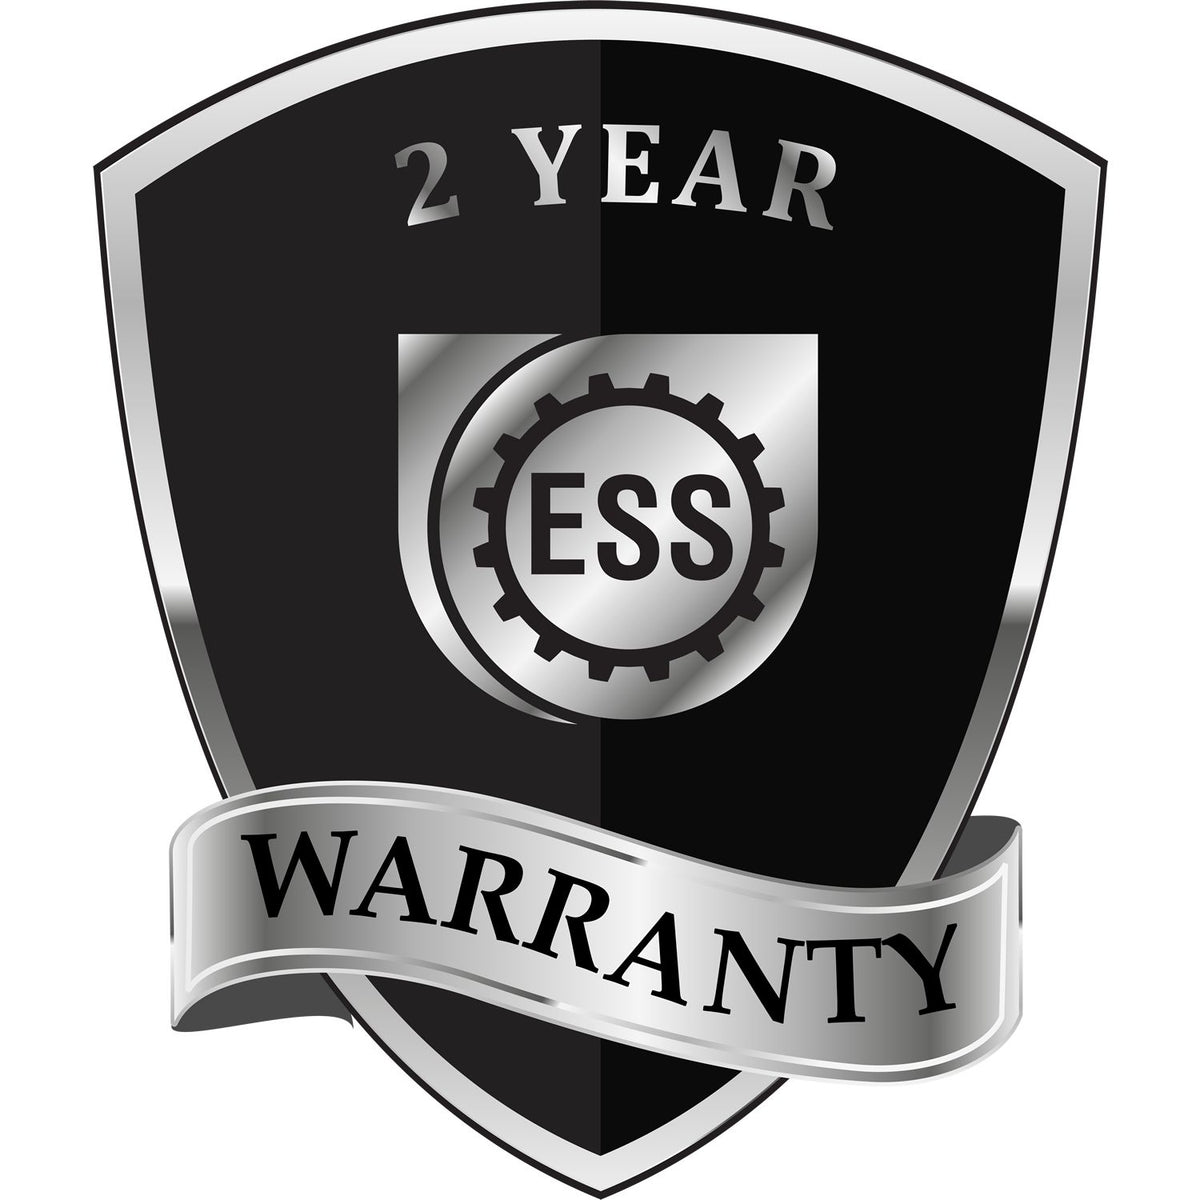 A black and silver badge or emblem showing warranty information for the Hybrid Missouri Land Surveyor Seal